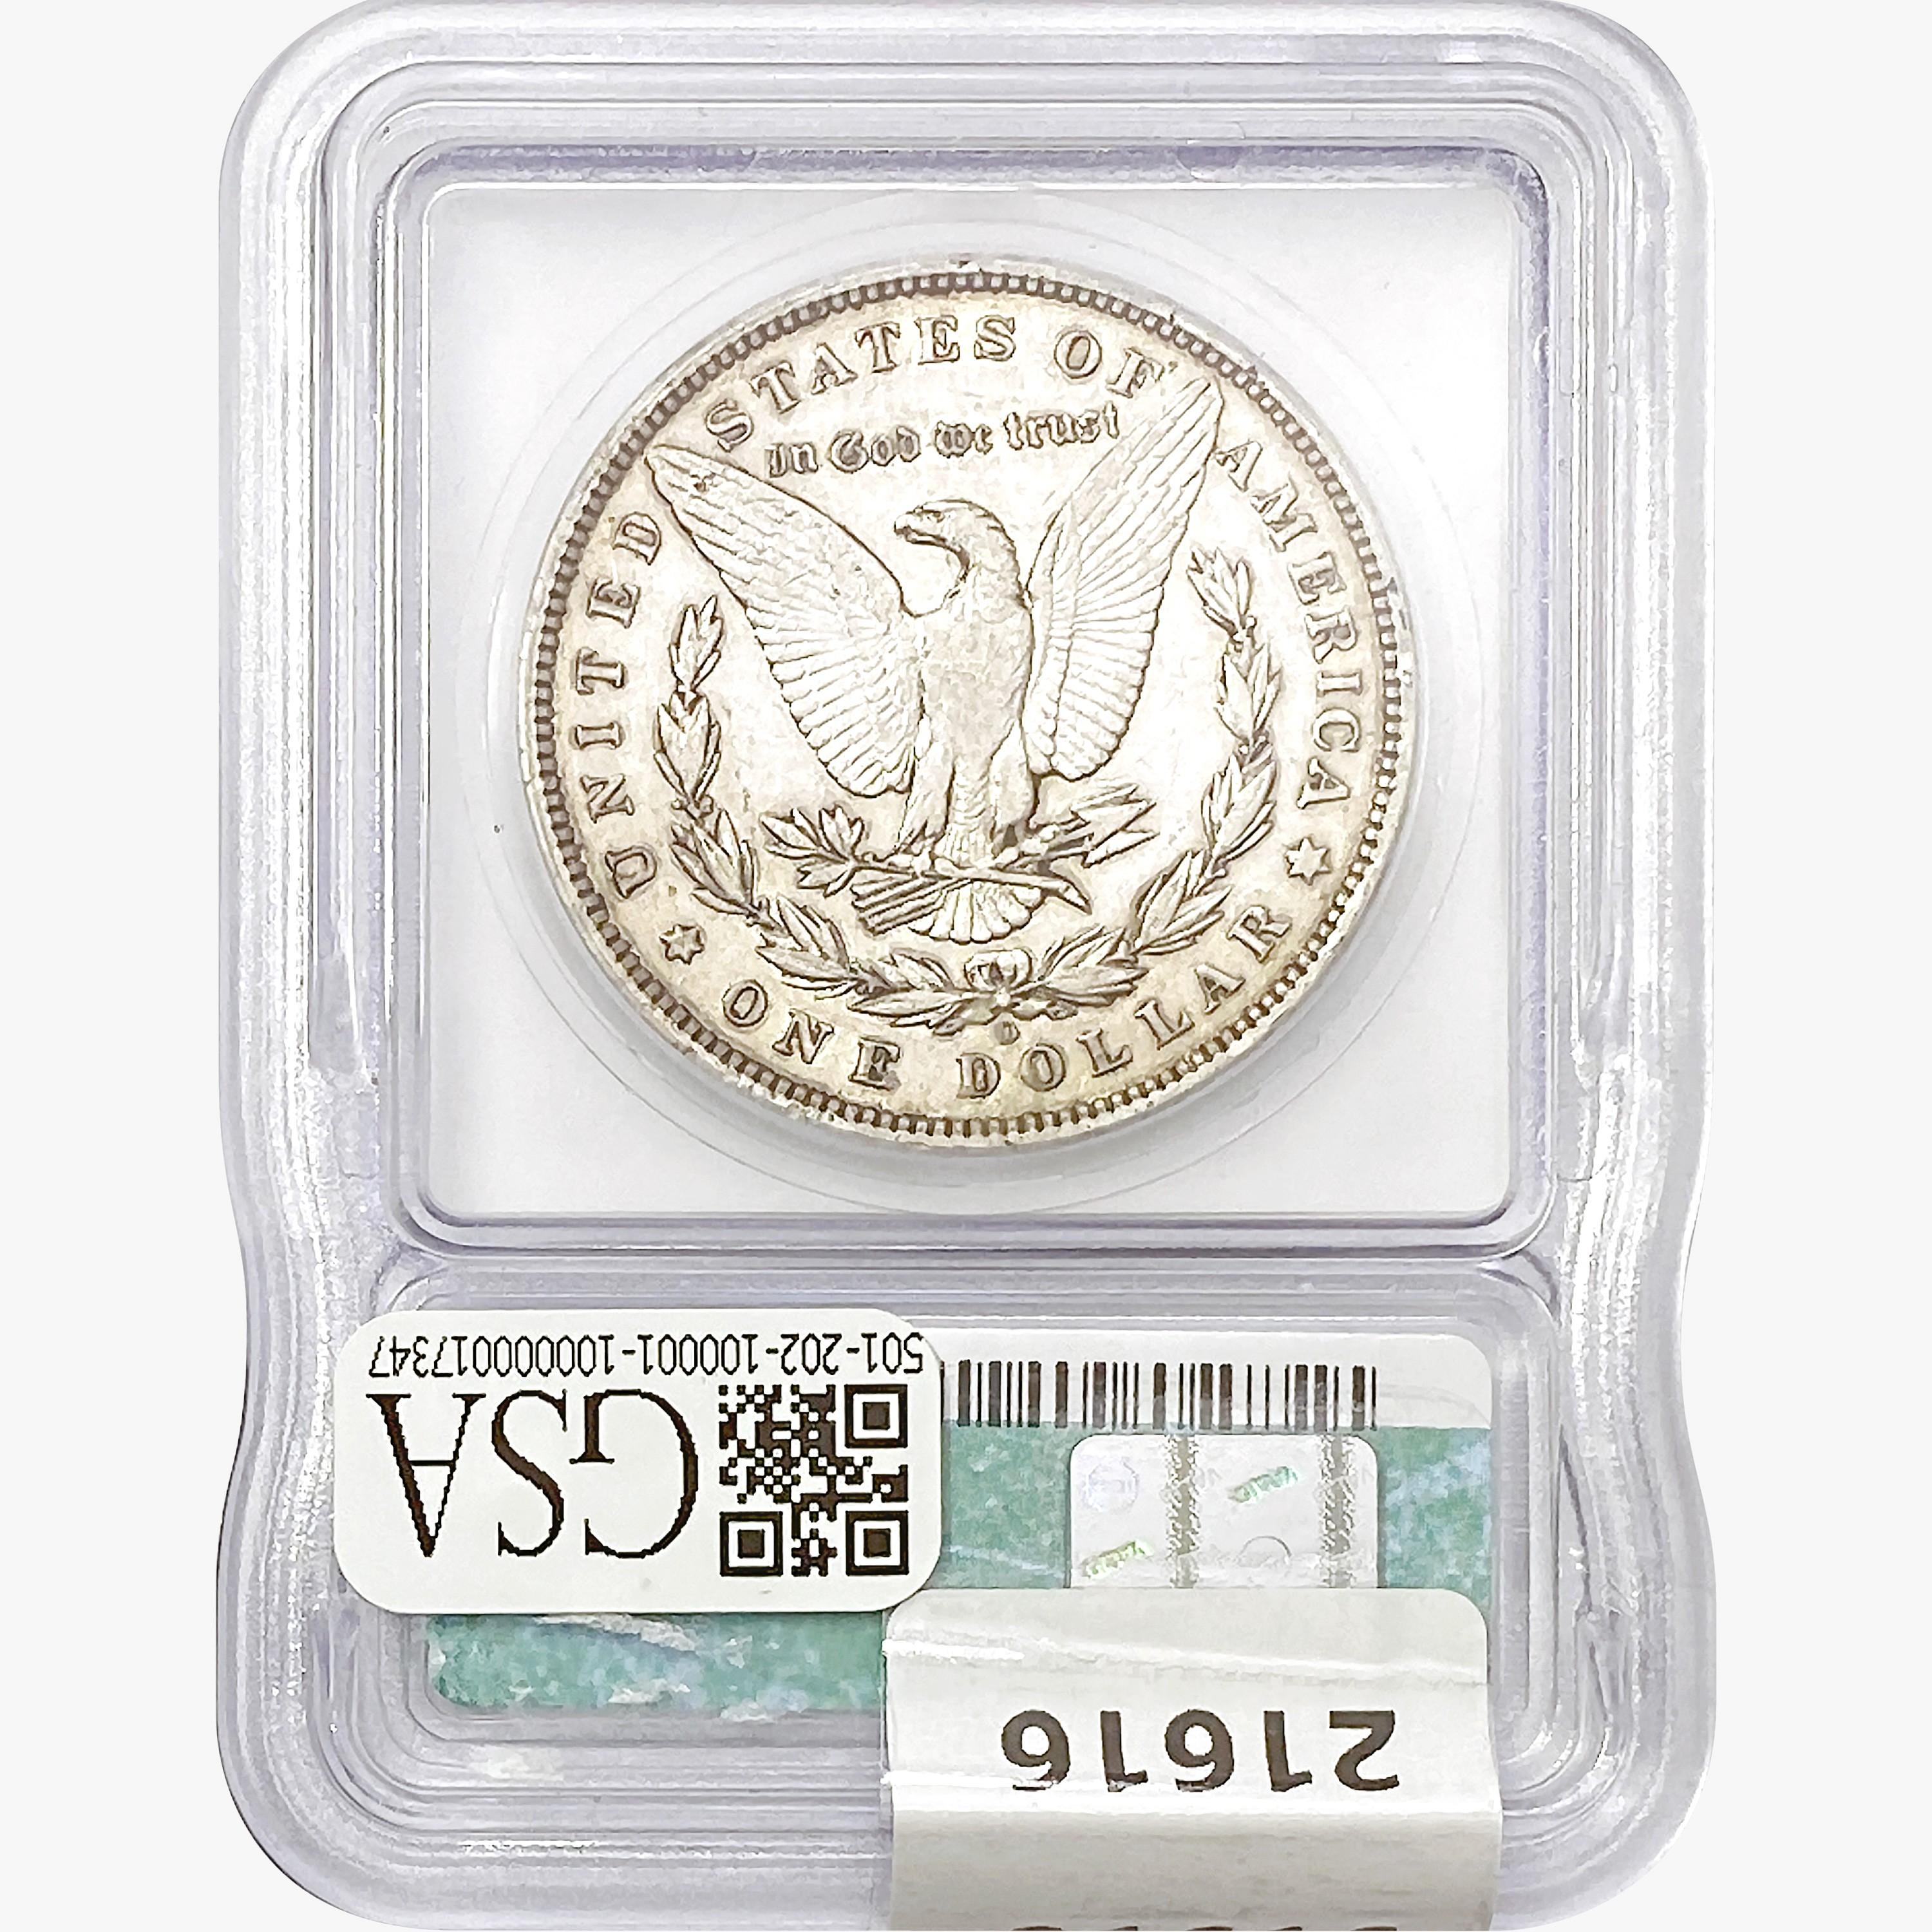 1897-O Morgan Silver Dollar ICG EF40